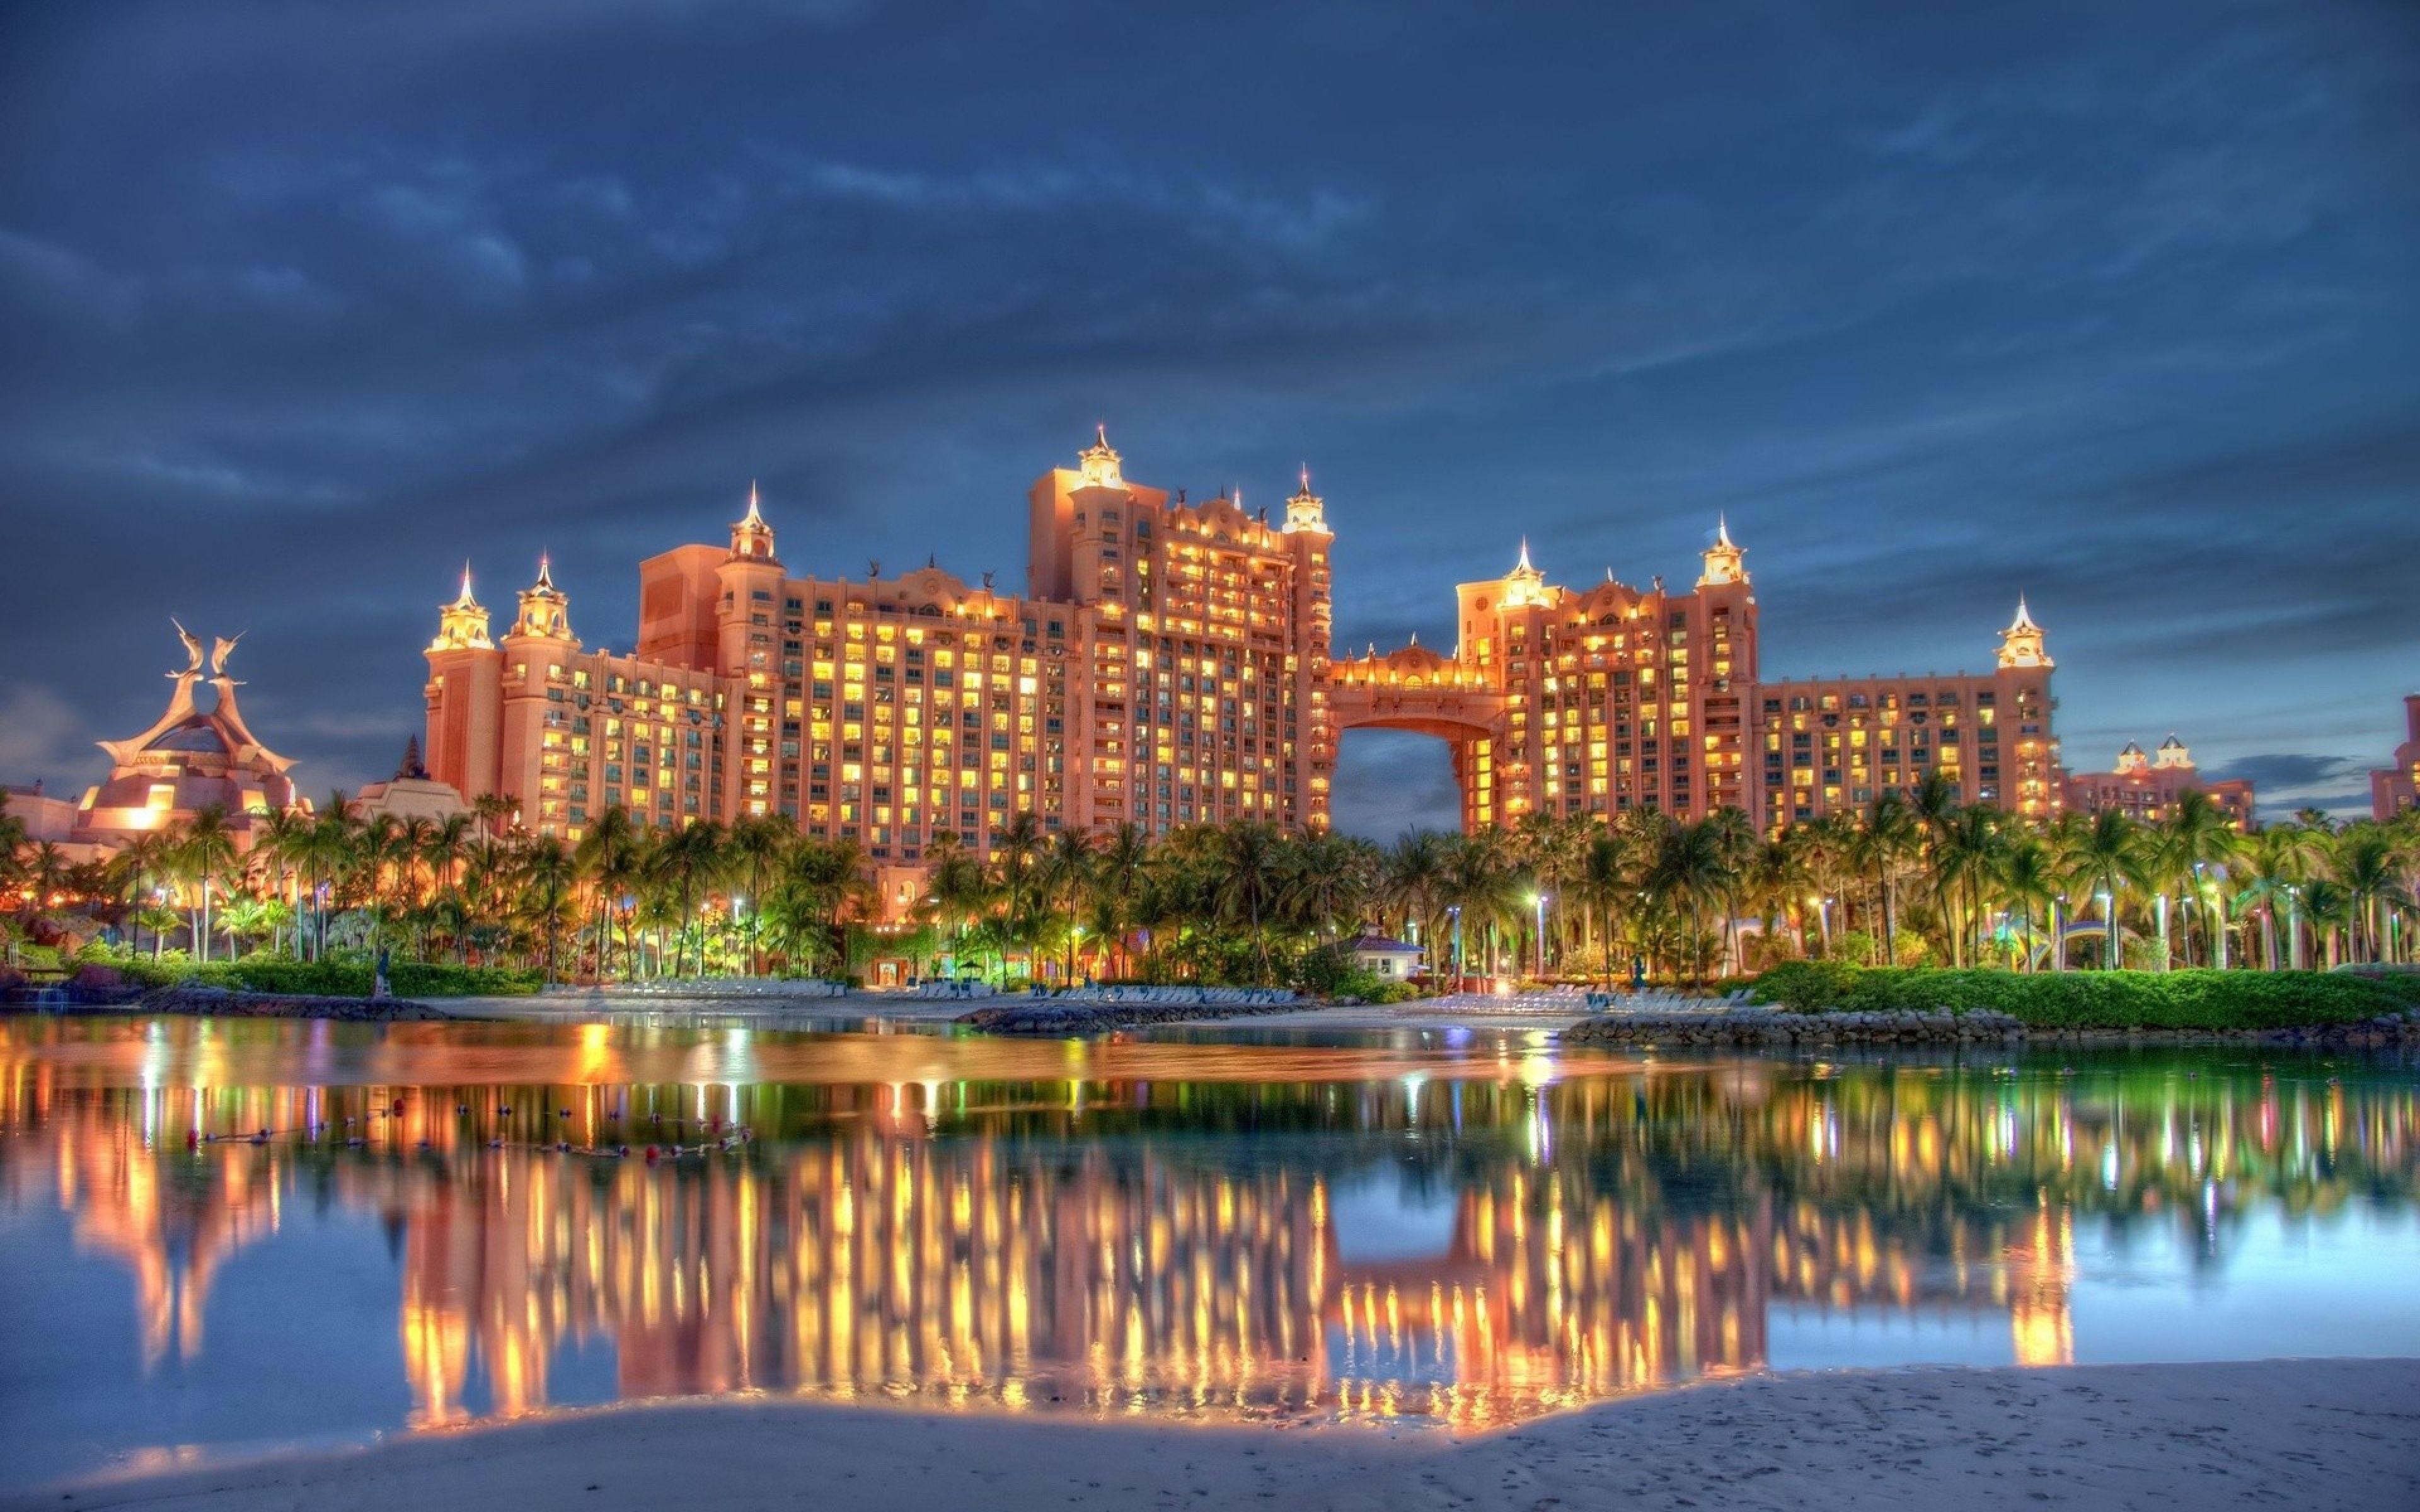 Download Wallpaper 3840x2400 Nassau, Atlantis hotel, Dubai